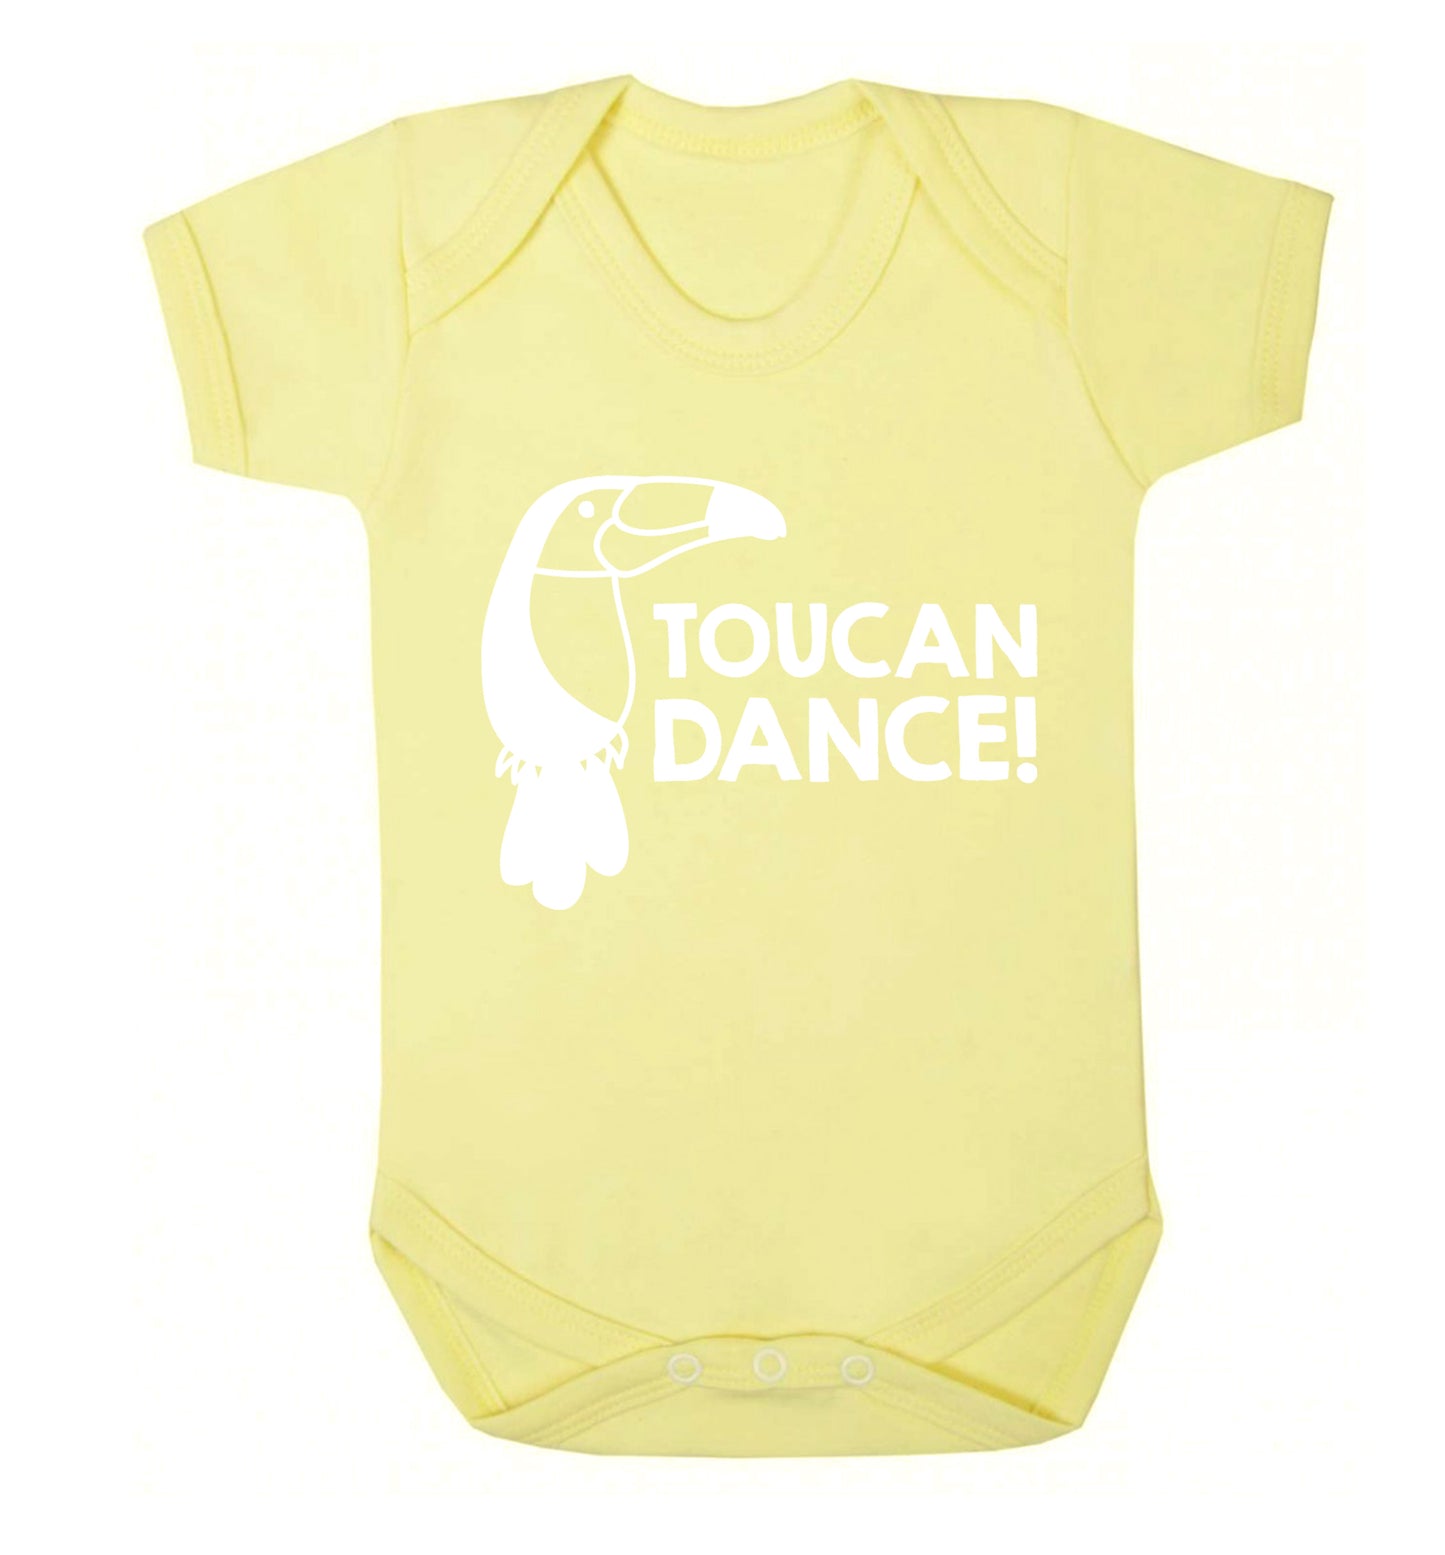 Toucan dance Baby Vest pale yellow 18-24 months